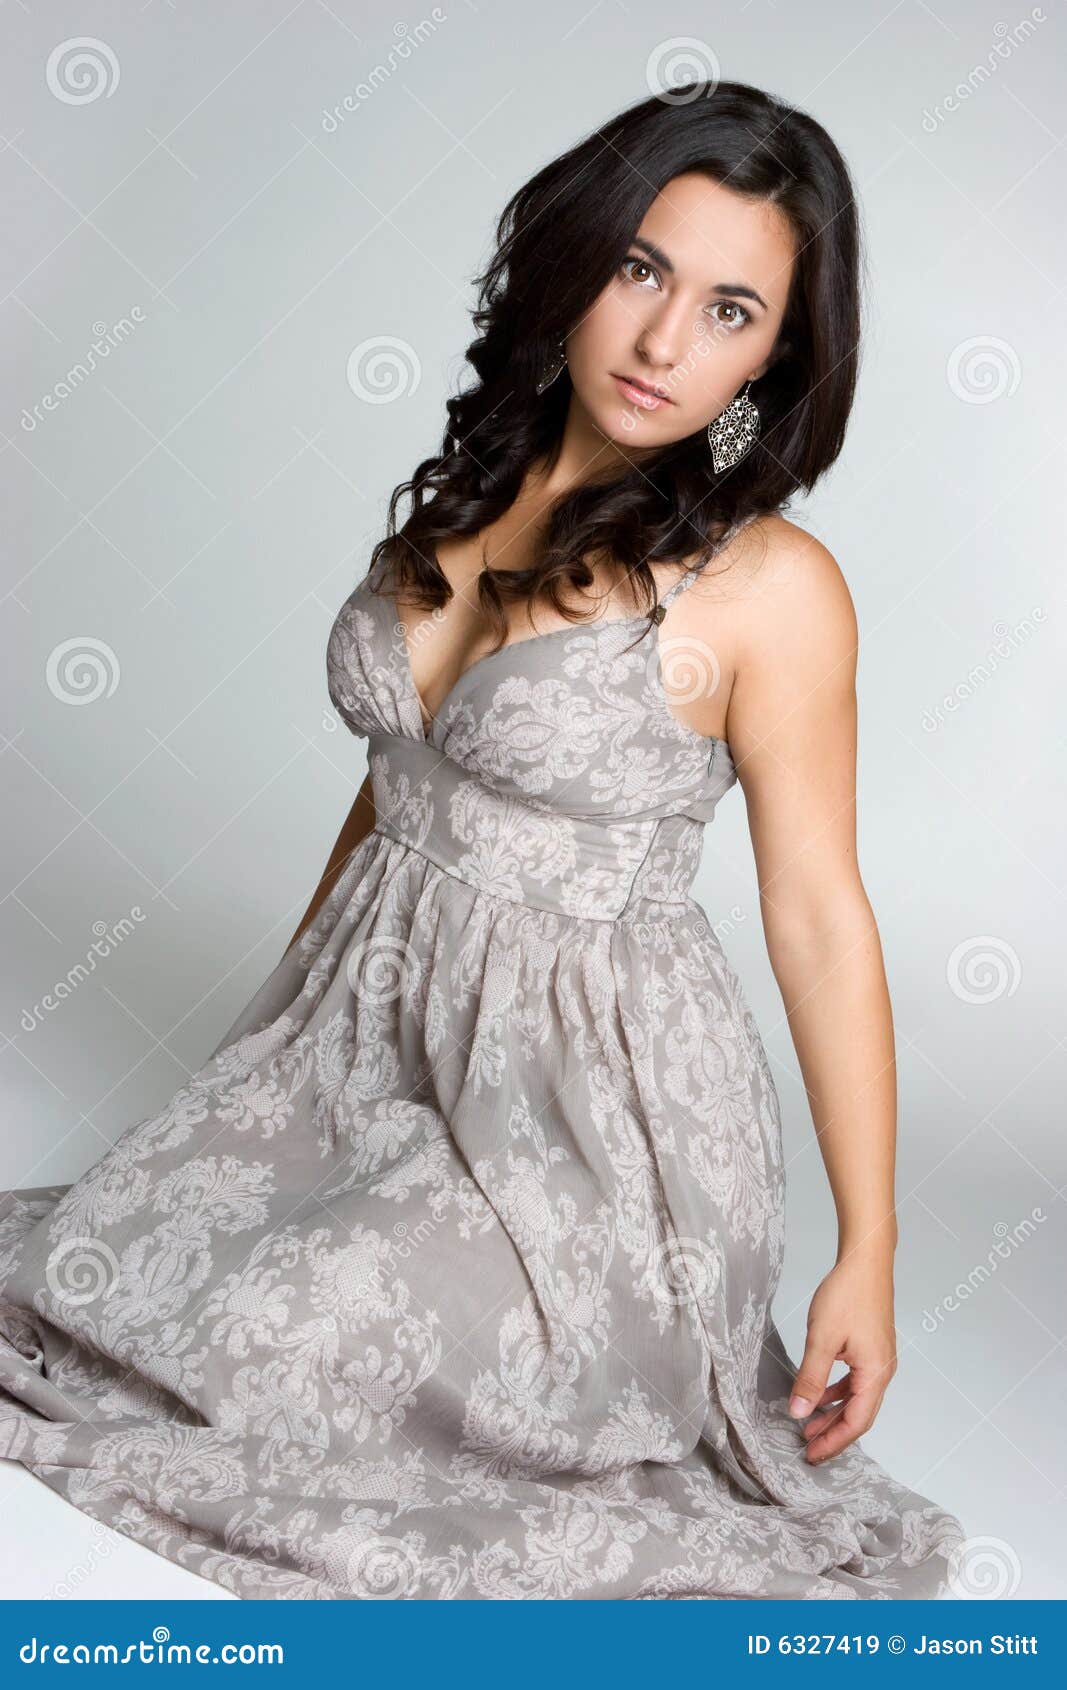 Glamorous Woman Royalty Free Stock Images - Image: 6327419